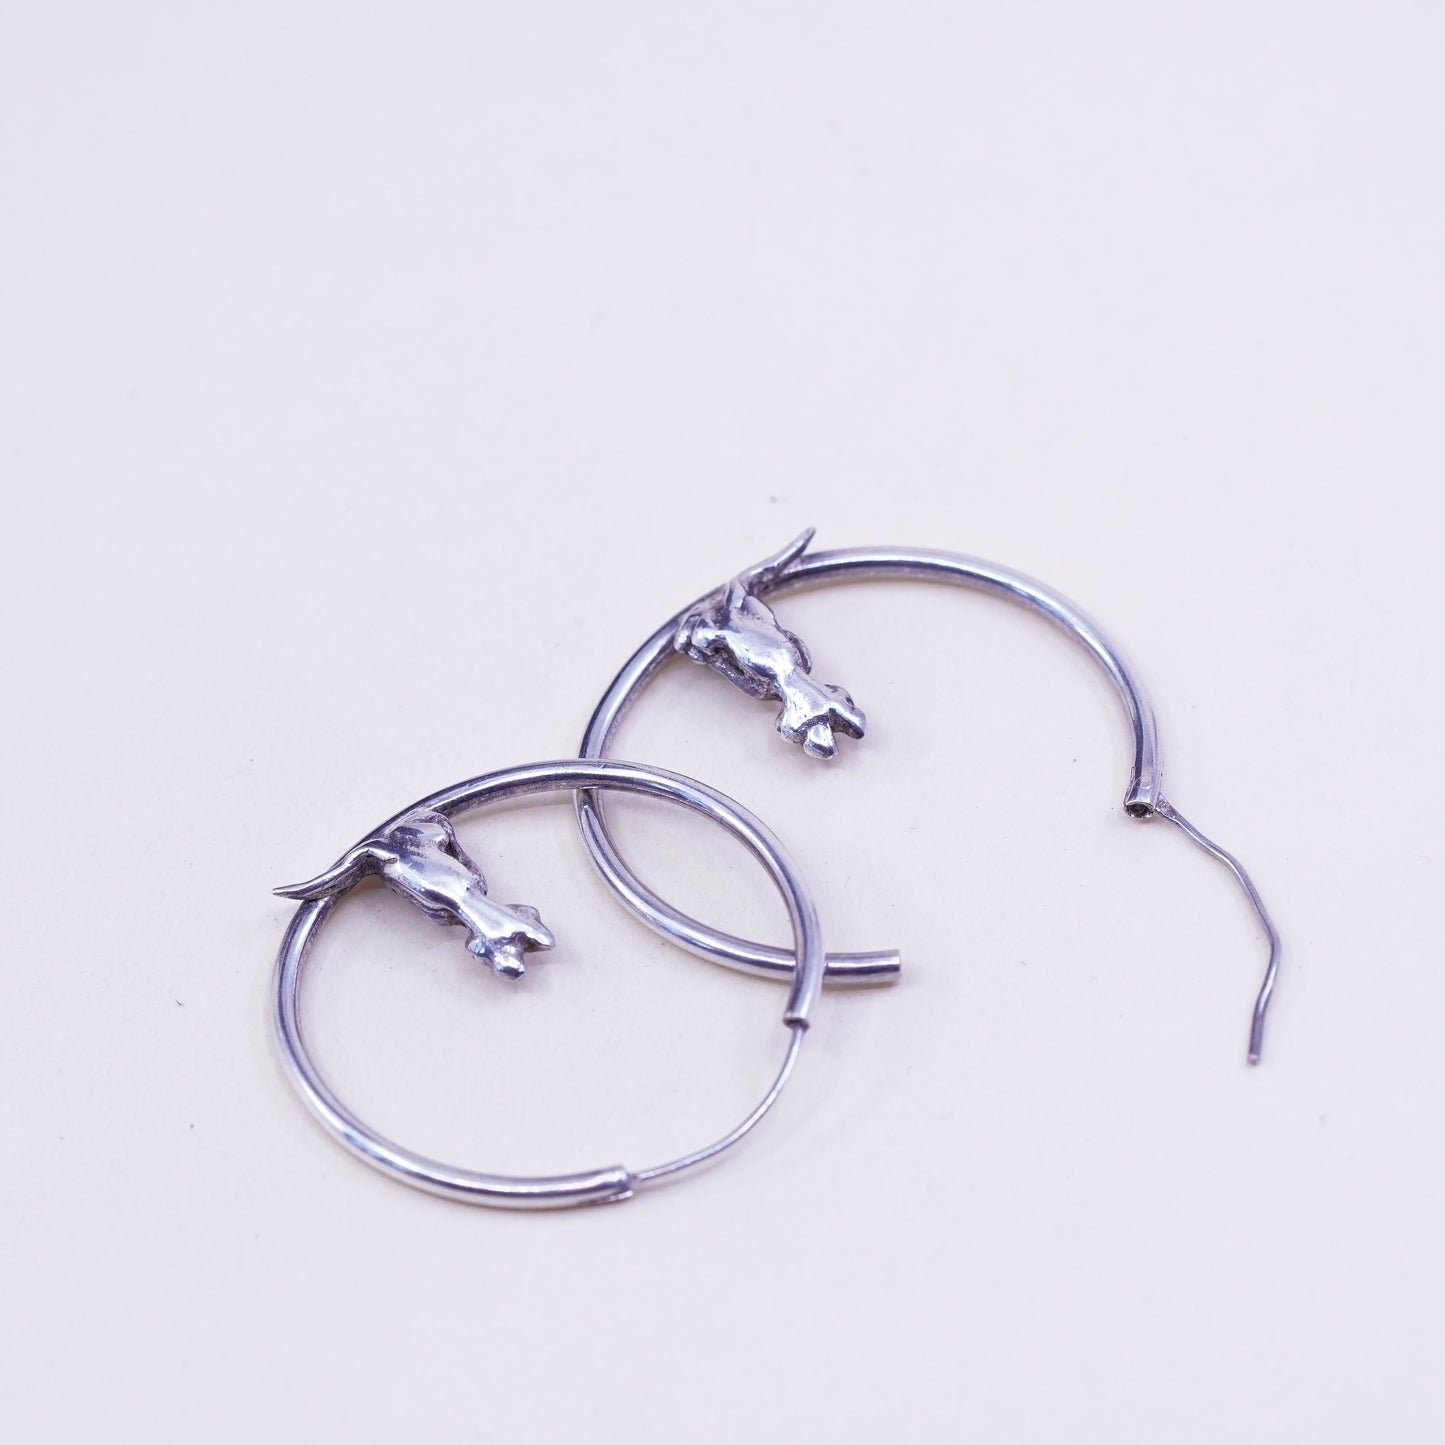 Vintage Sterling silver handmade earrings, 925 hoops with kitty cat